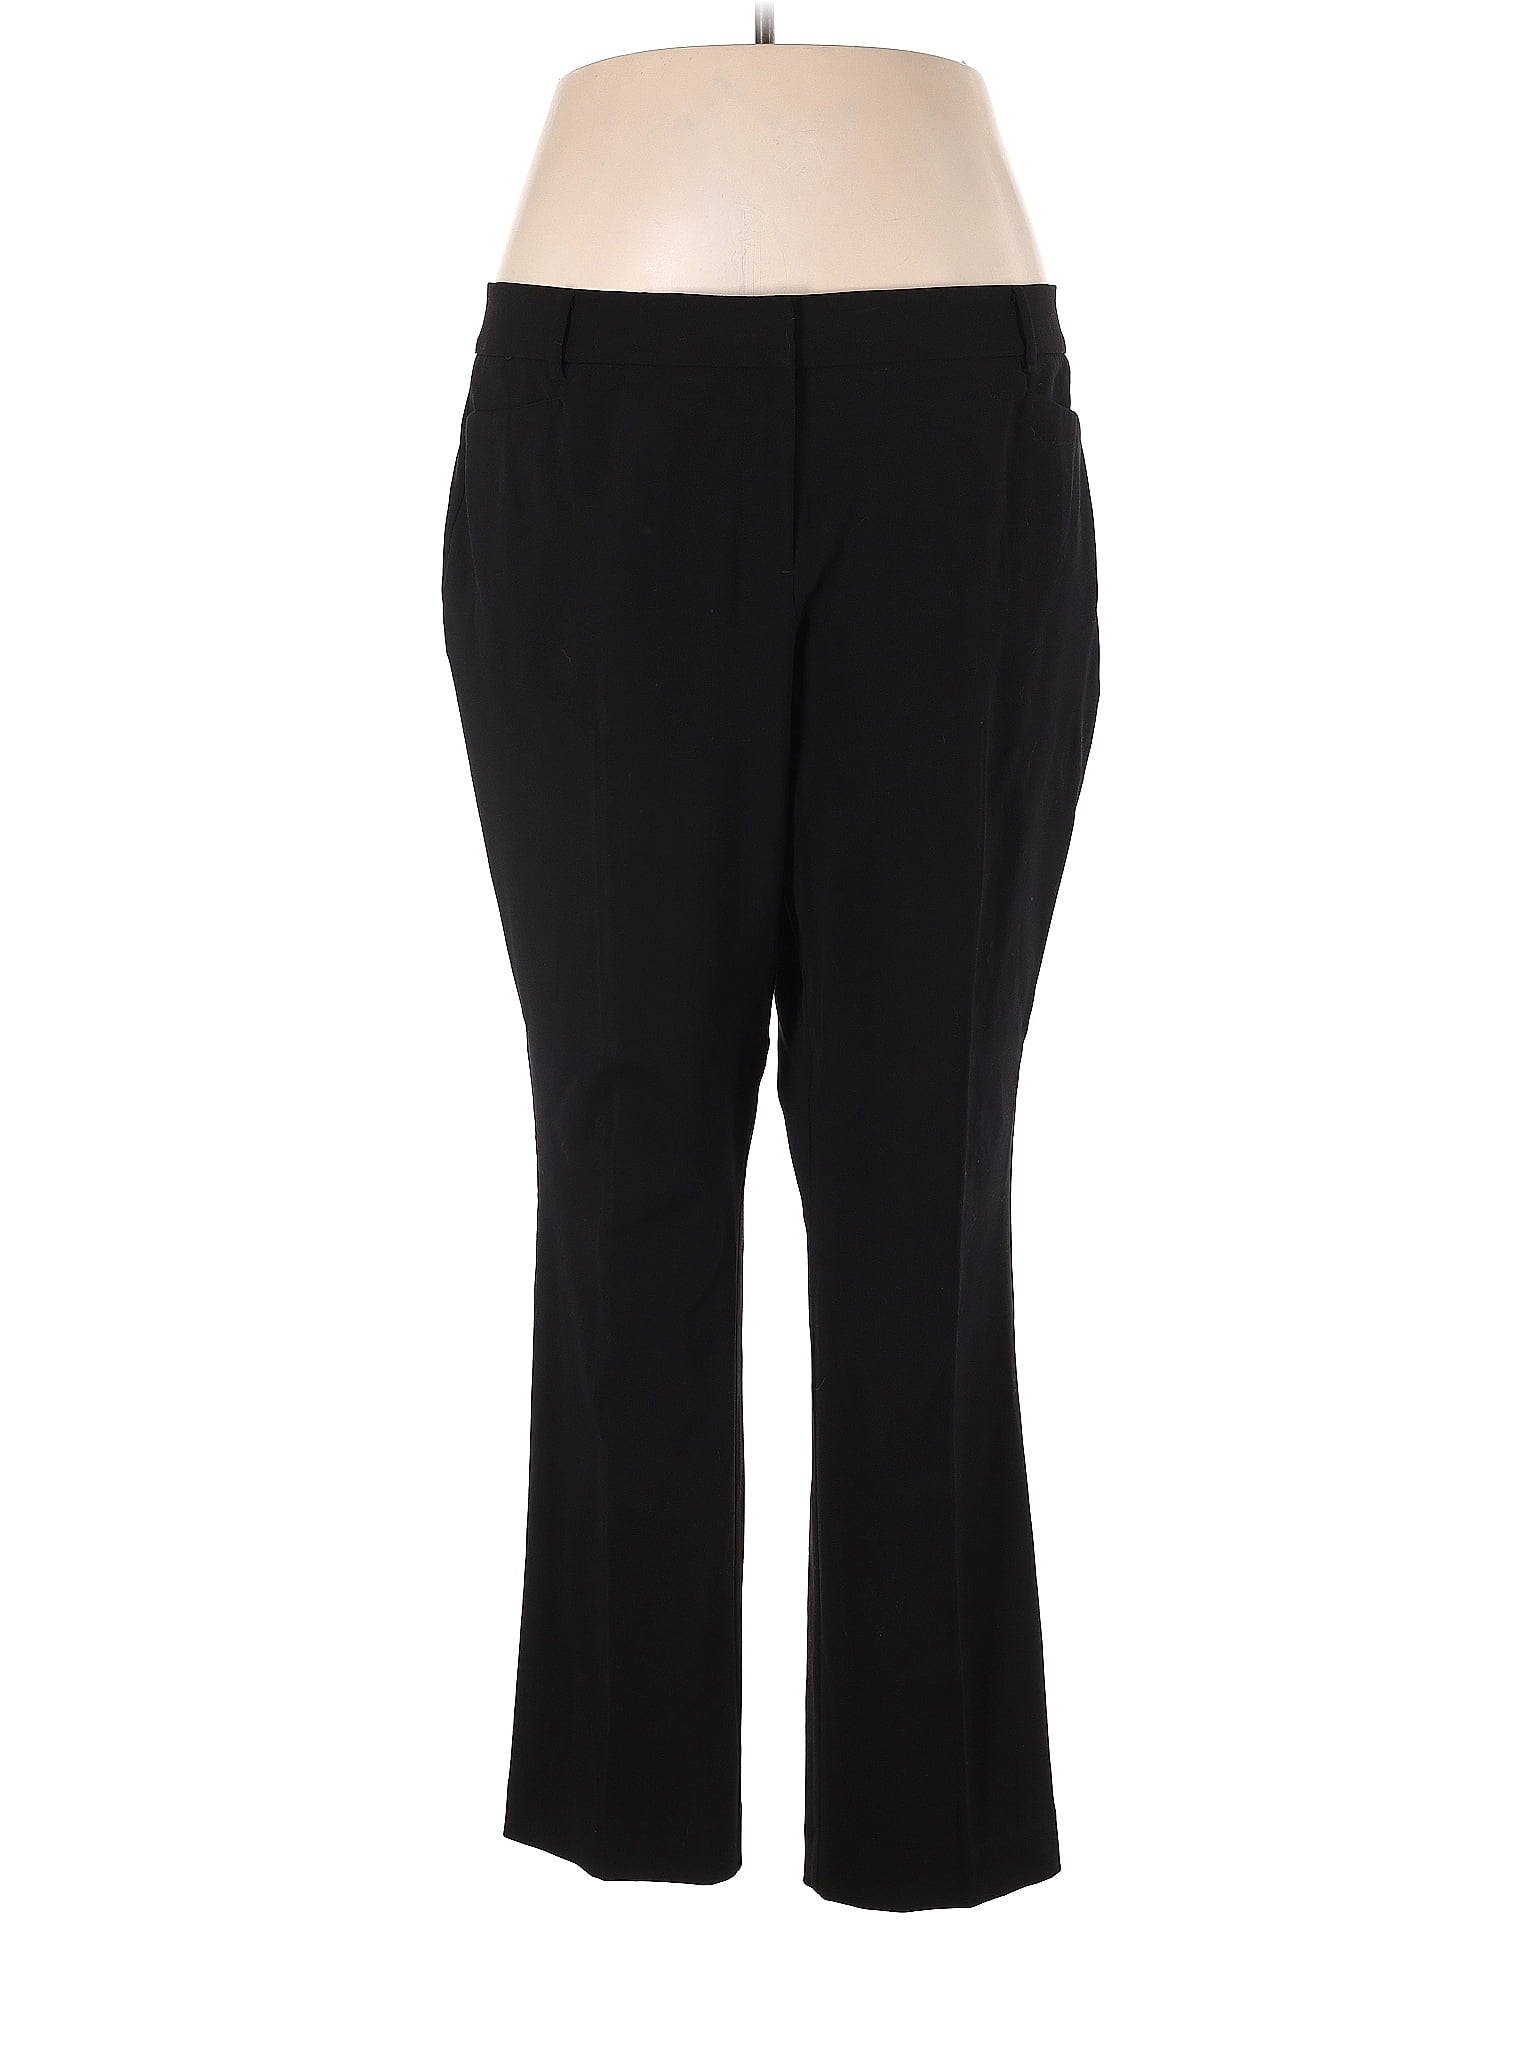 7th Avenue Design Studio New York & Company Polka Dots Black Dress Pants  Size 18 (Plus) - 65% off